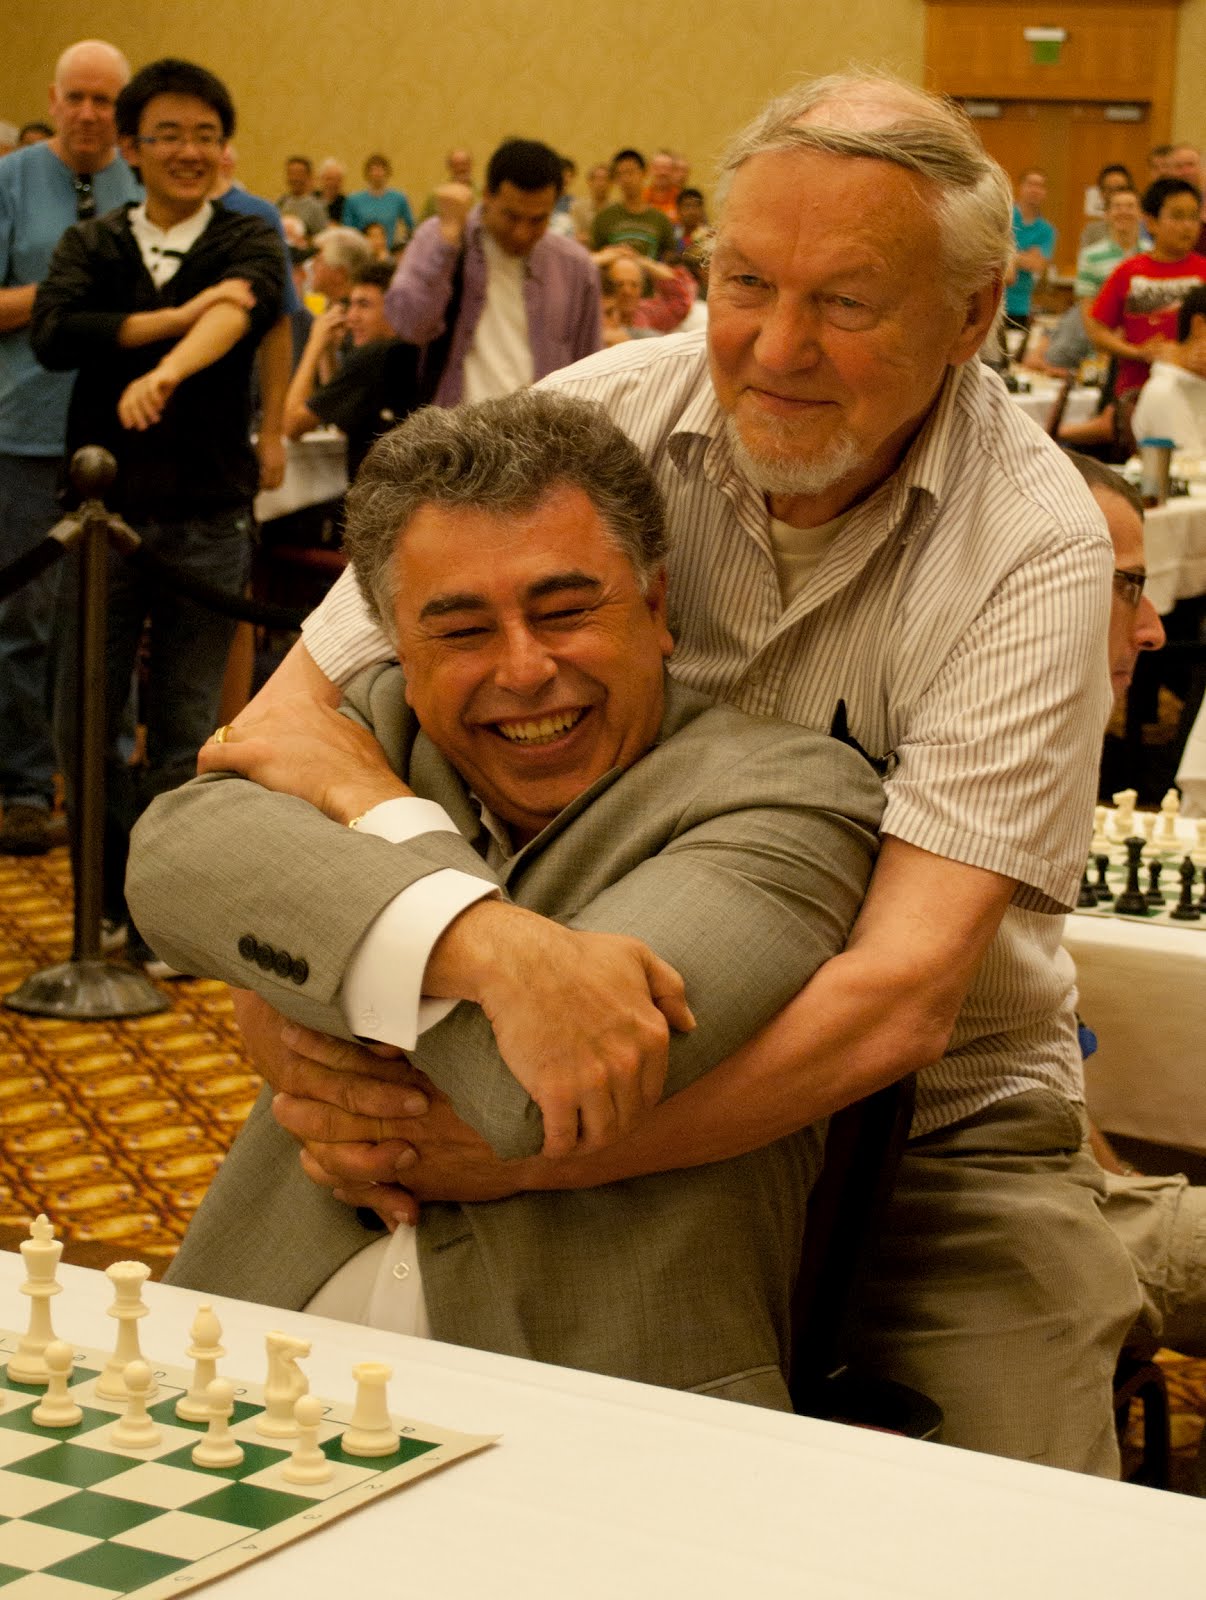 October 2012 - Northwest Chess!